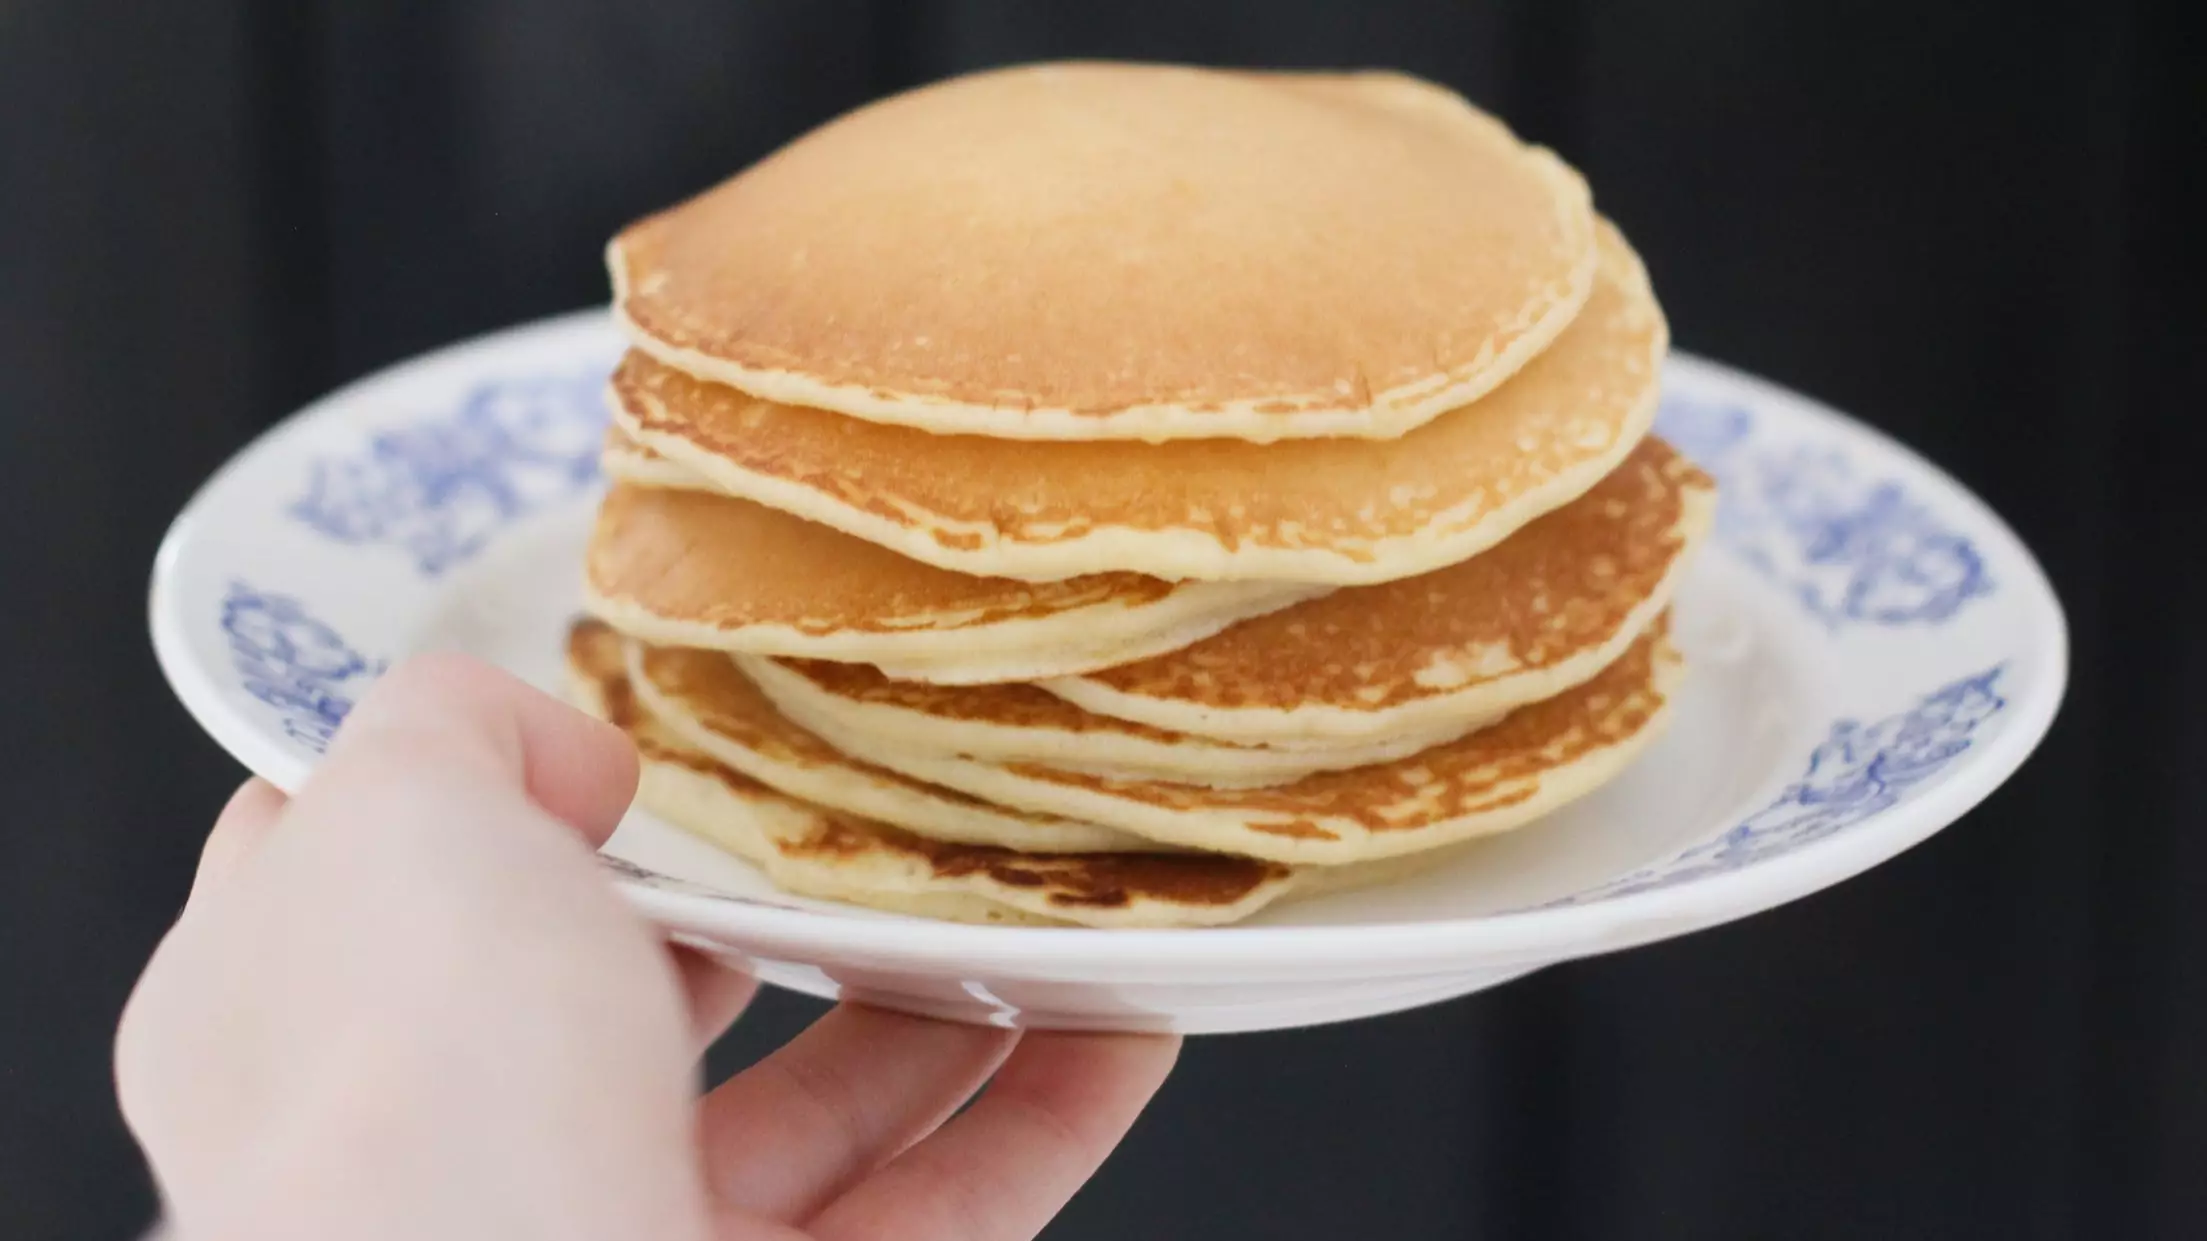 This Pancake Recipe Has More Than 10,000 Five Star Reviews Online